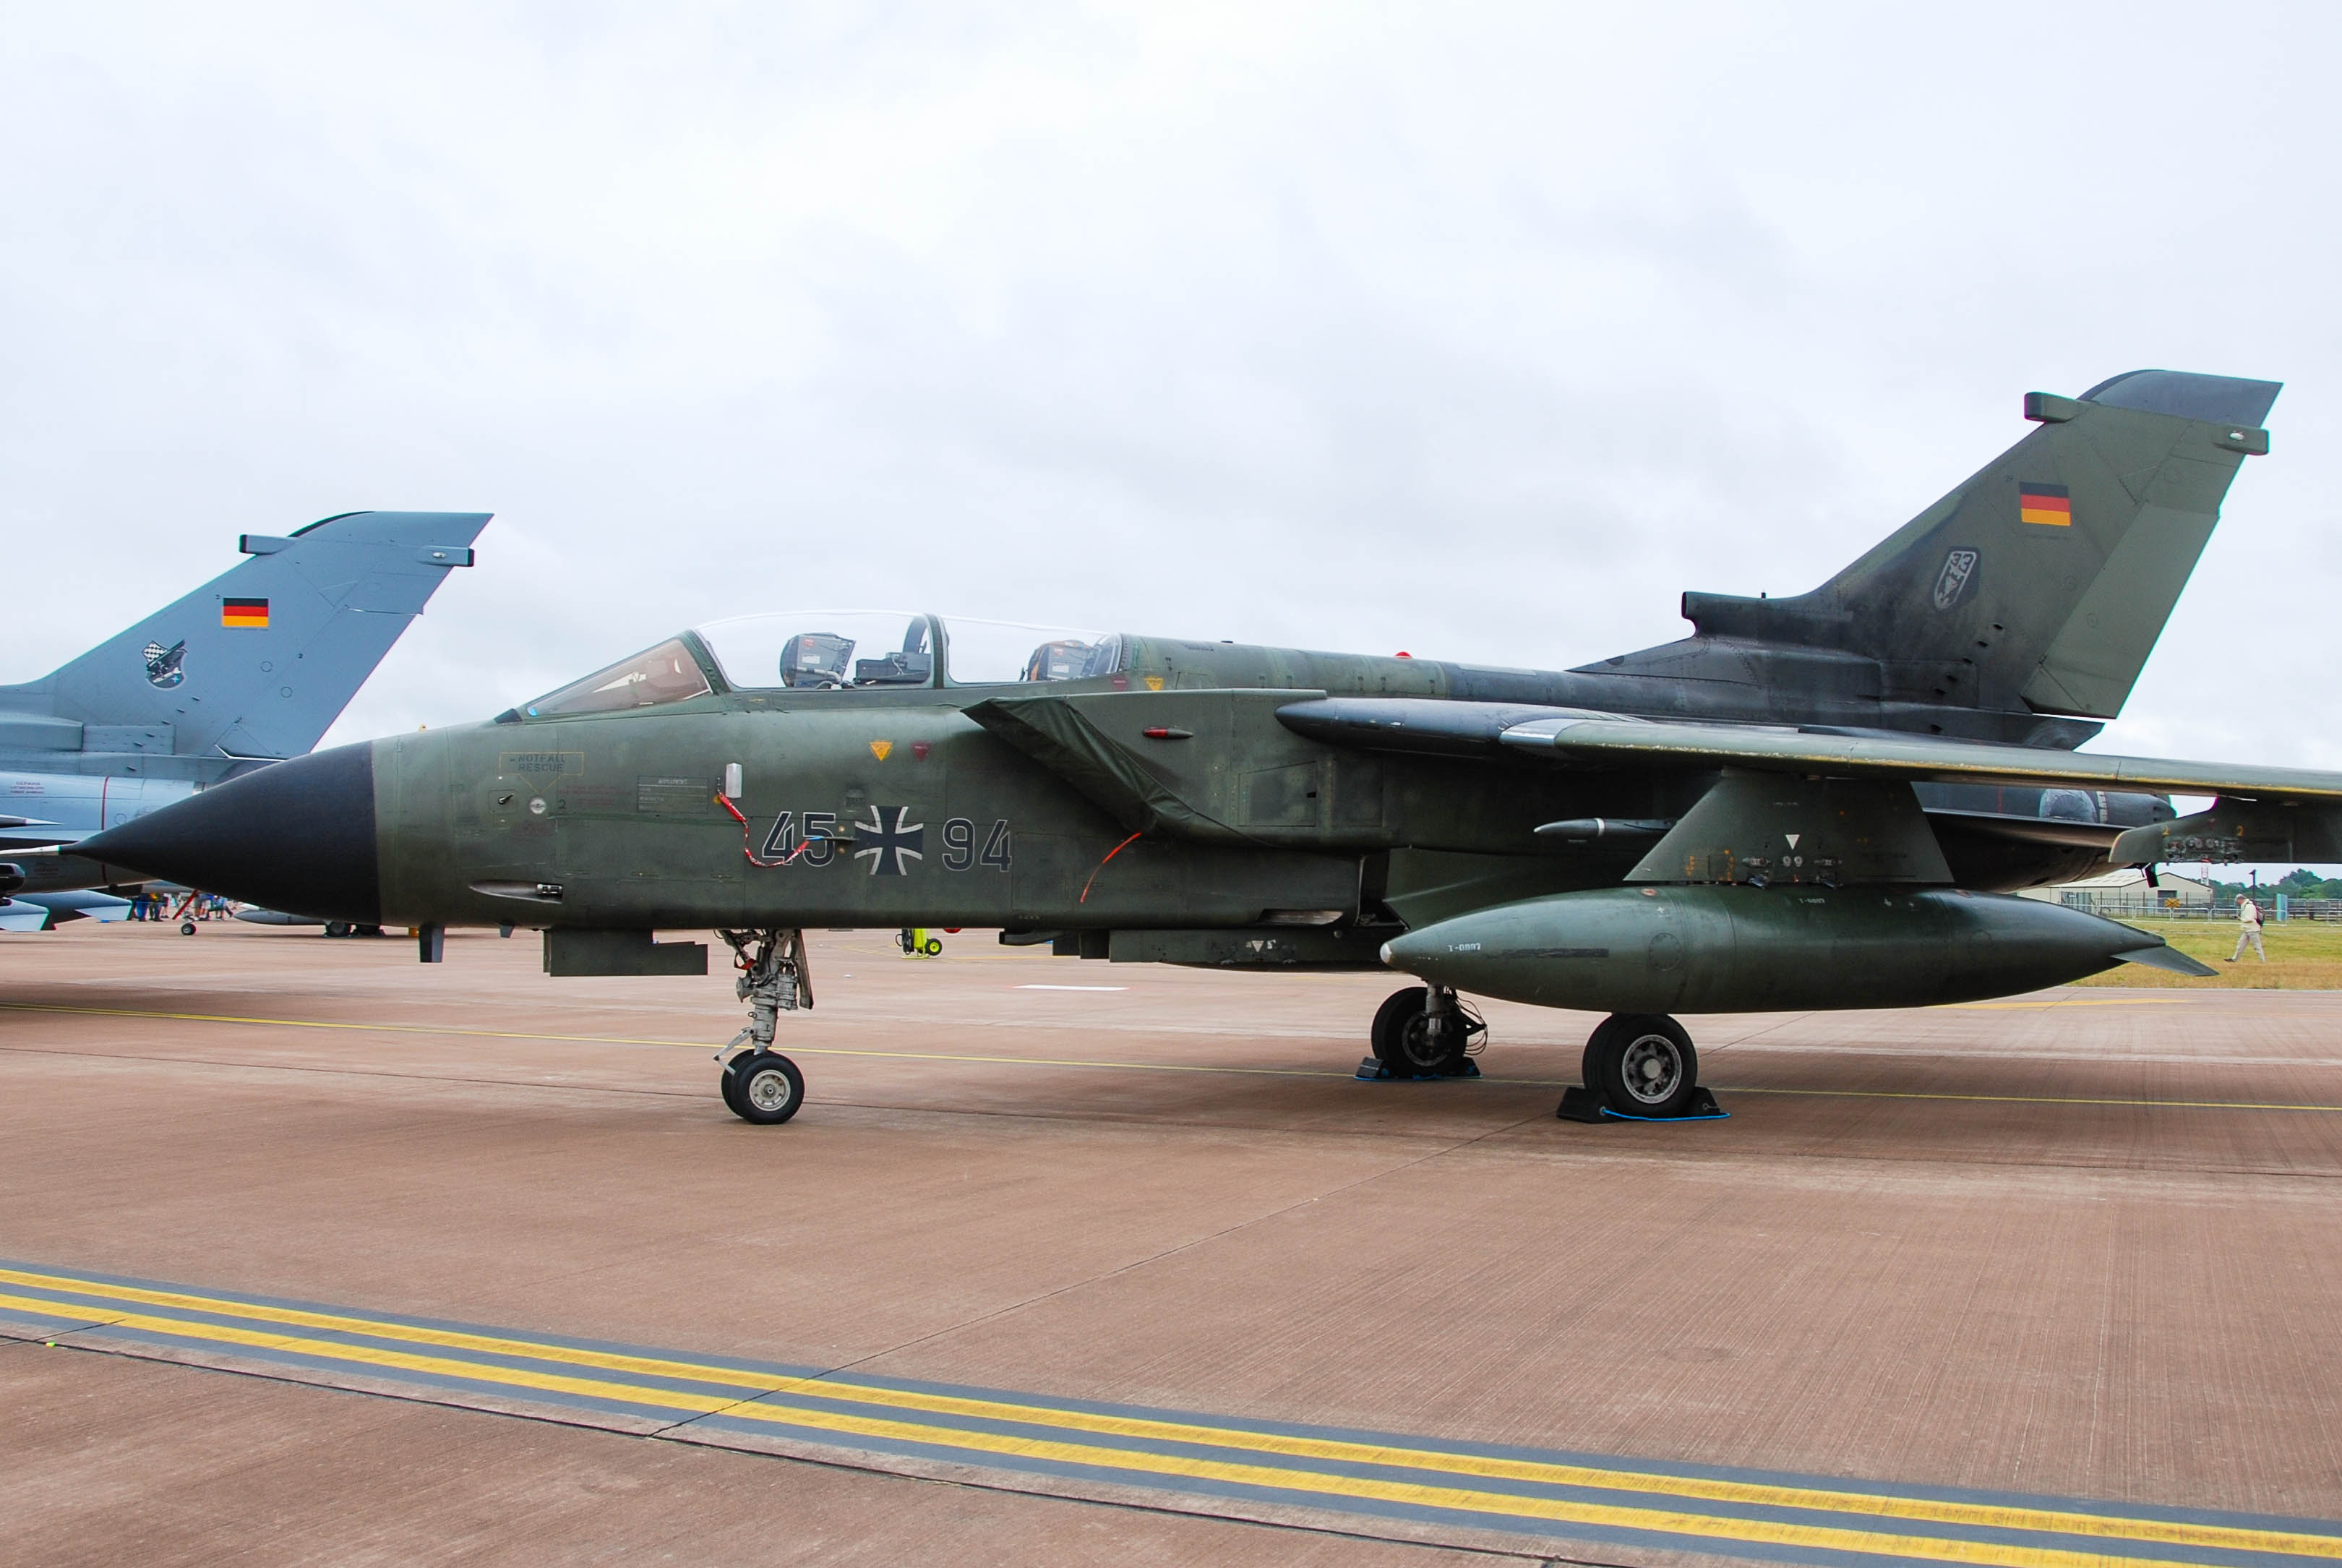 45+94/45+94 German Air Force Panavia Tornado Airframe Information - AVSpotters.com